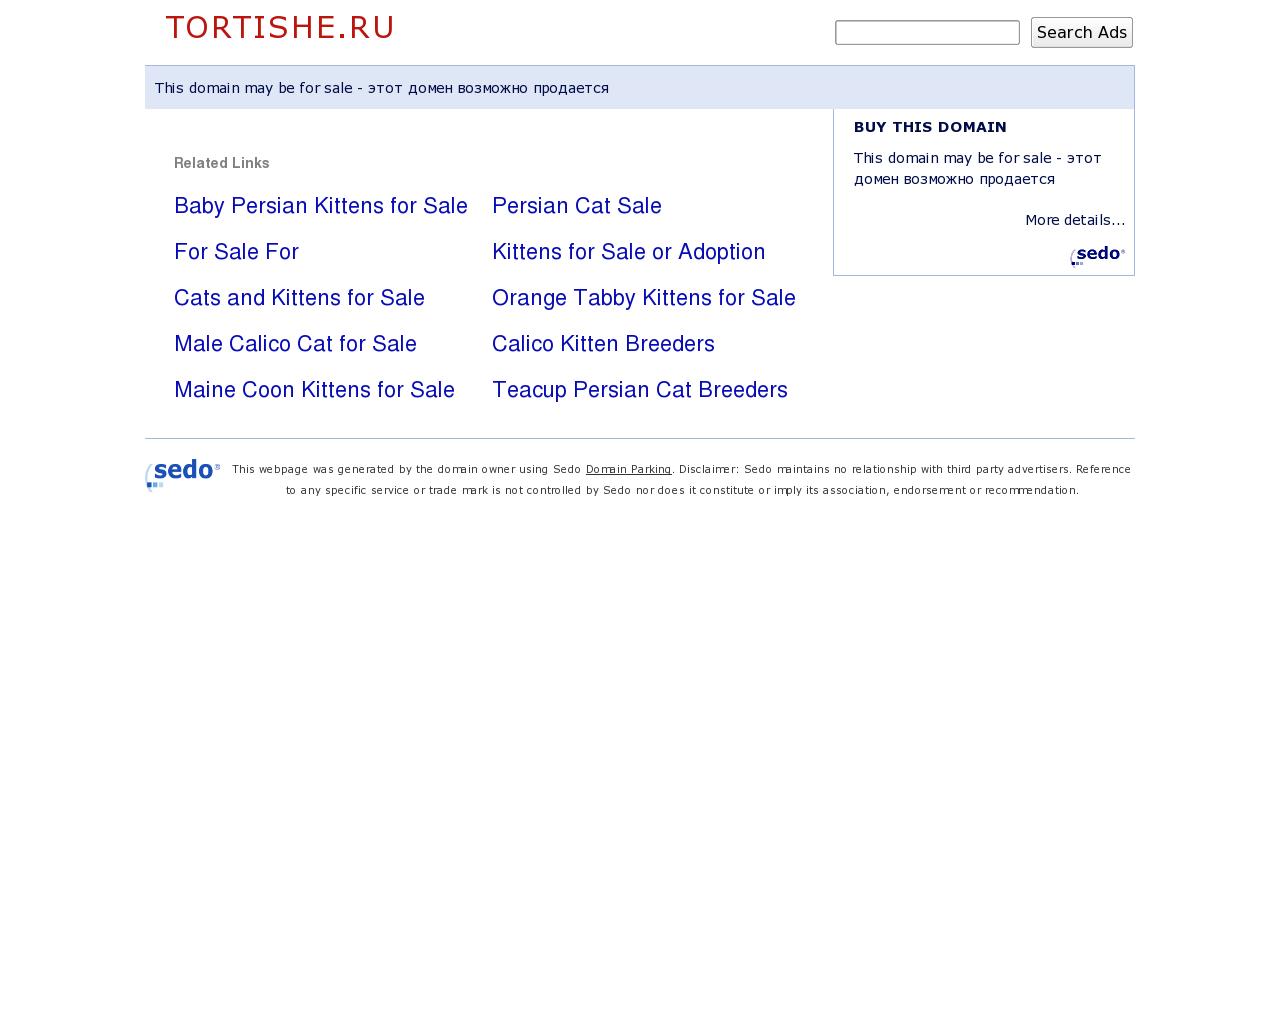 Изображение сайта tortishe.ru в разрешении 1280x1024